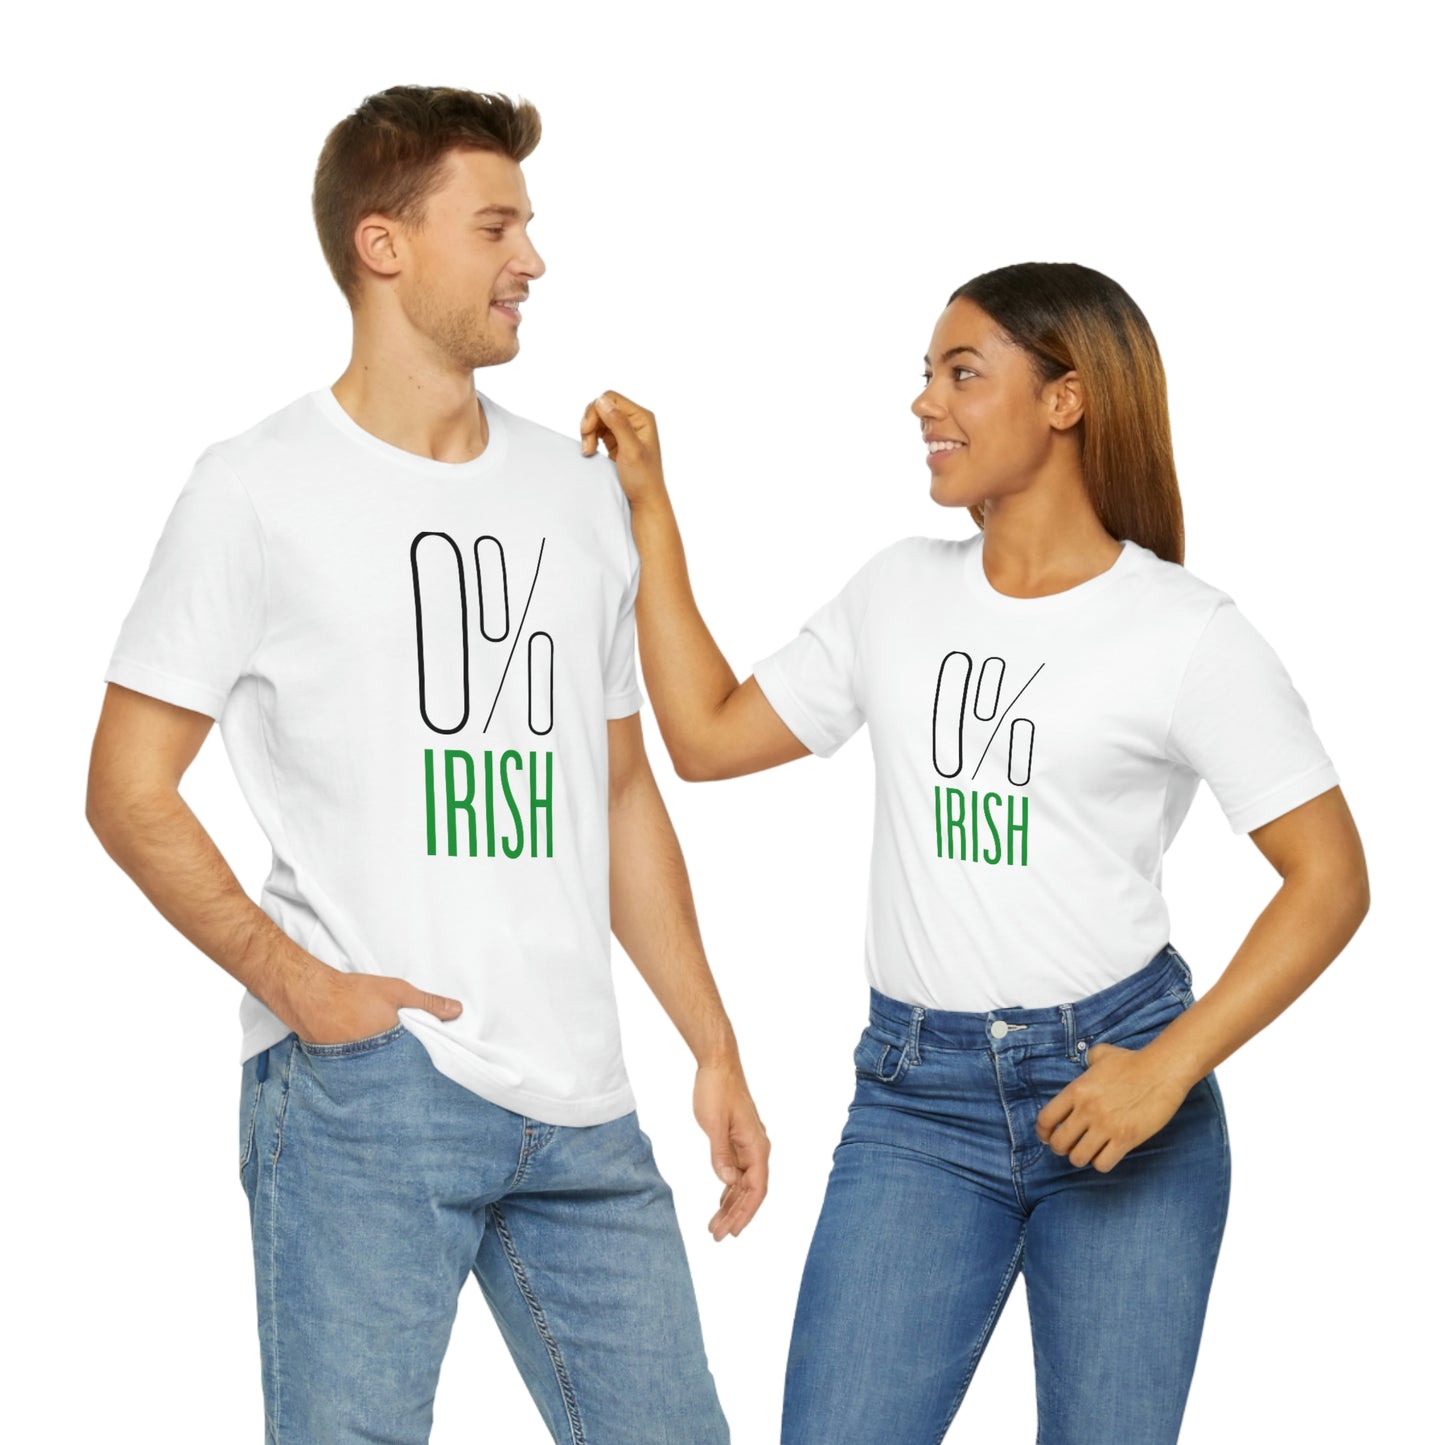 Zero Percent Irish T-Shirt | EDGY T-Shirt Company | Funny Unisex Jersey Short Sleeve Tee